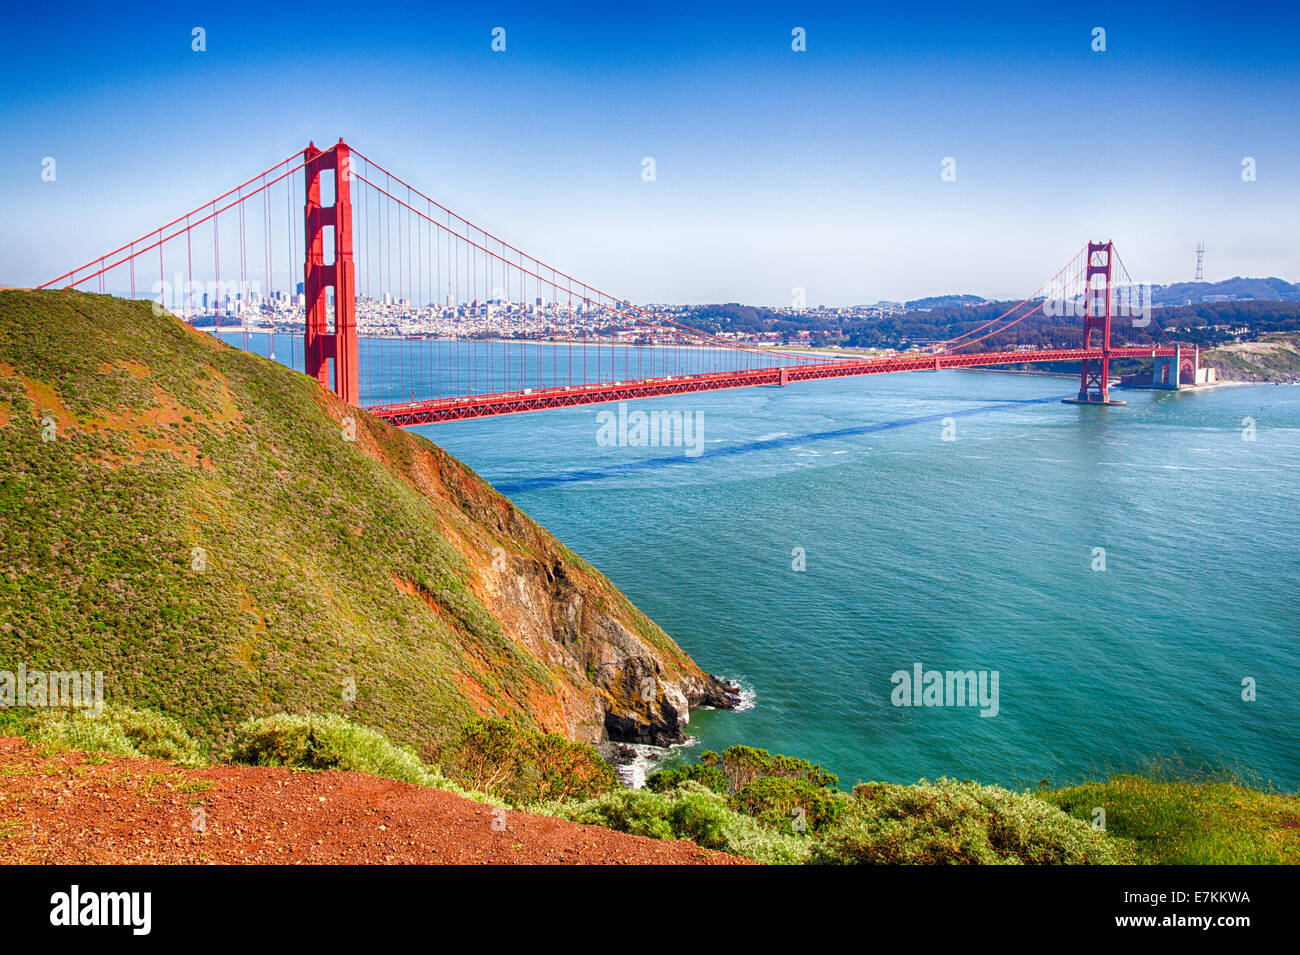 Landscape of the Golden Gate Bridge and San Francisco Bay. Stock Photo